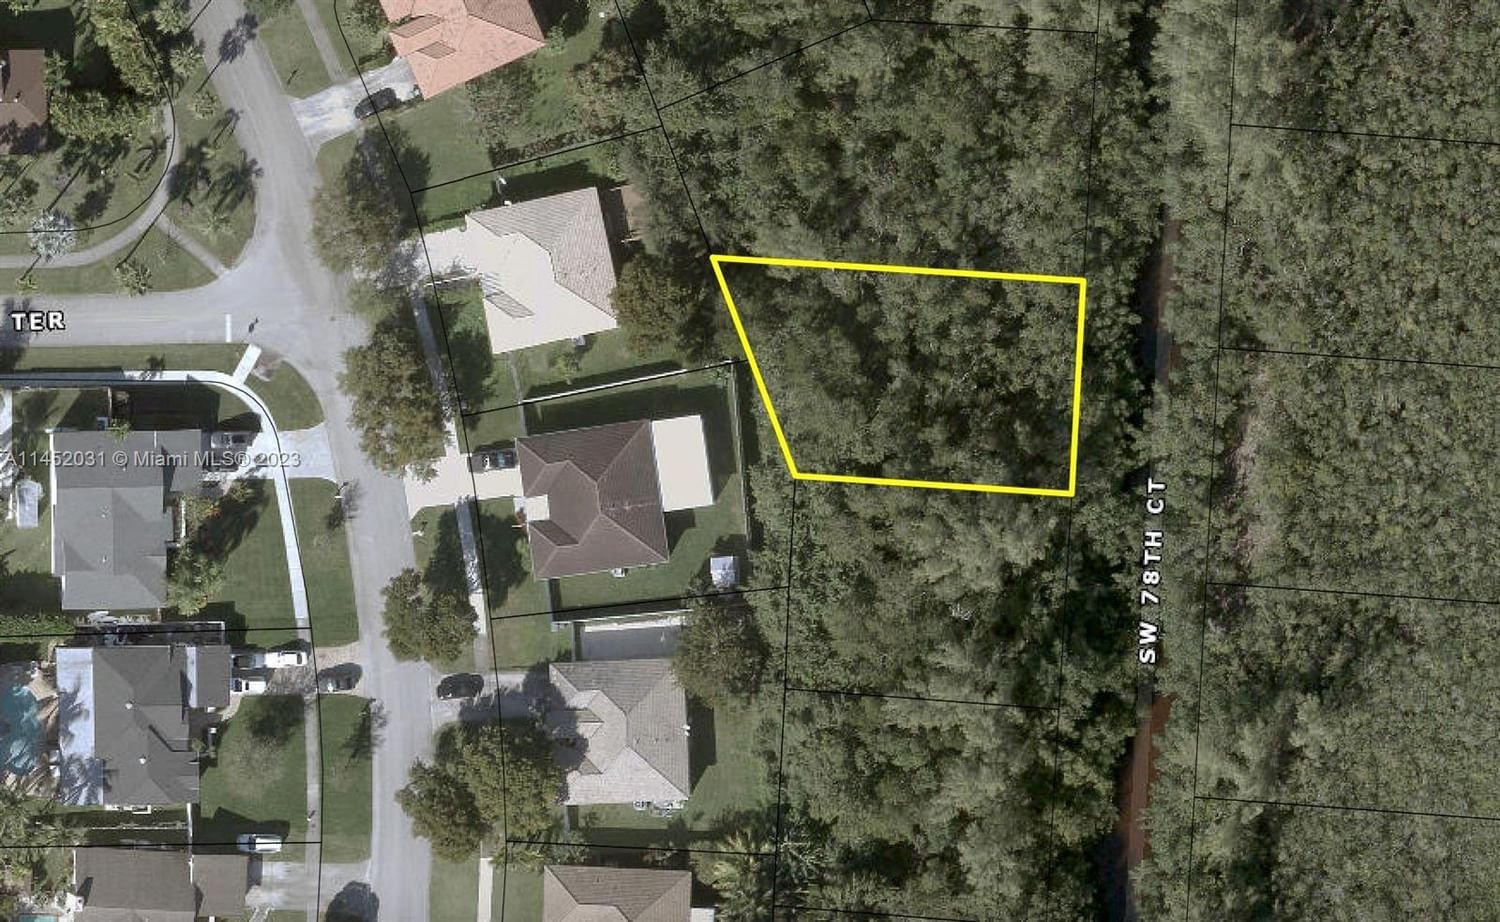 Real estate property located at 20124 78th Ct, Miami-Dade County, SAGA BAY SEC 1 PT 7, Cutler Bay, FL